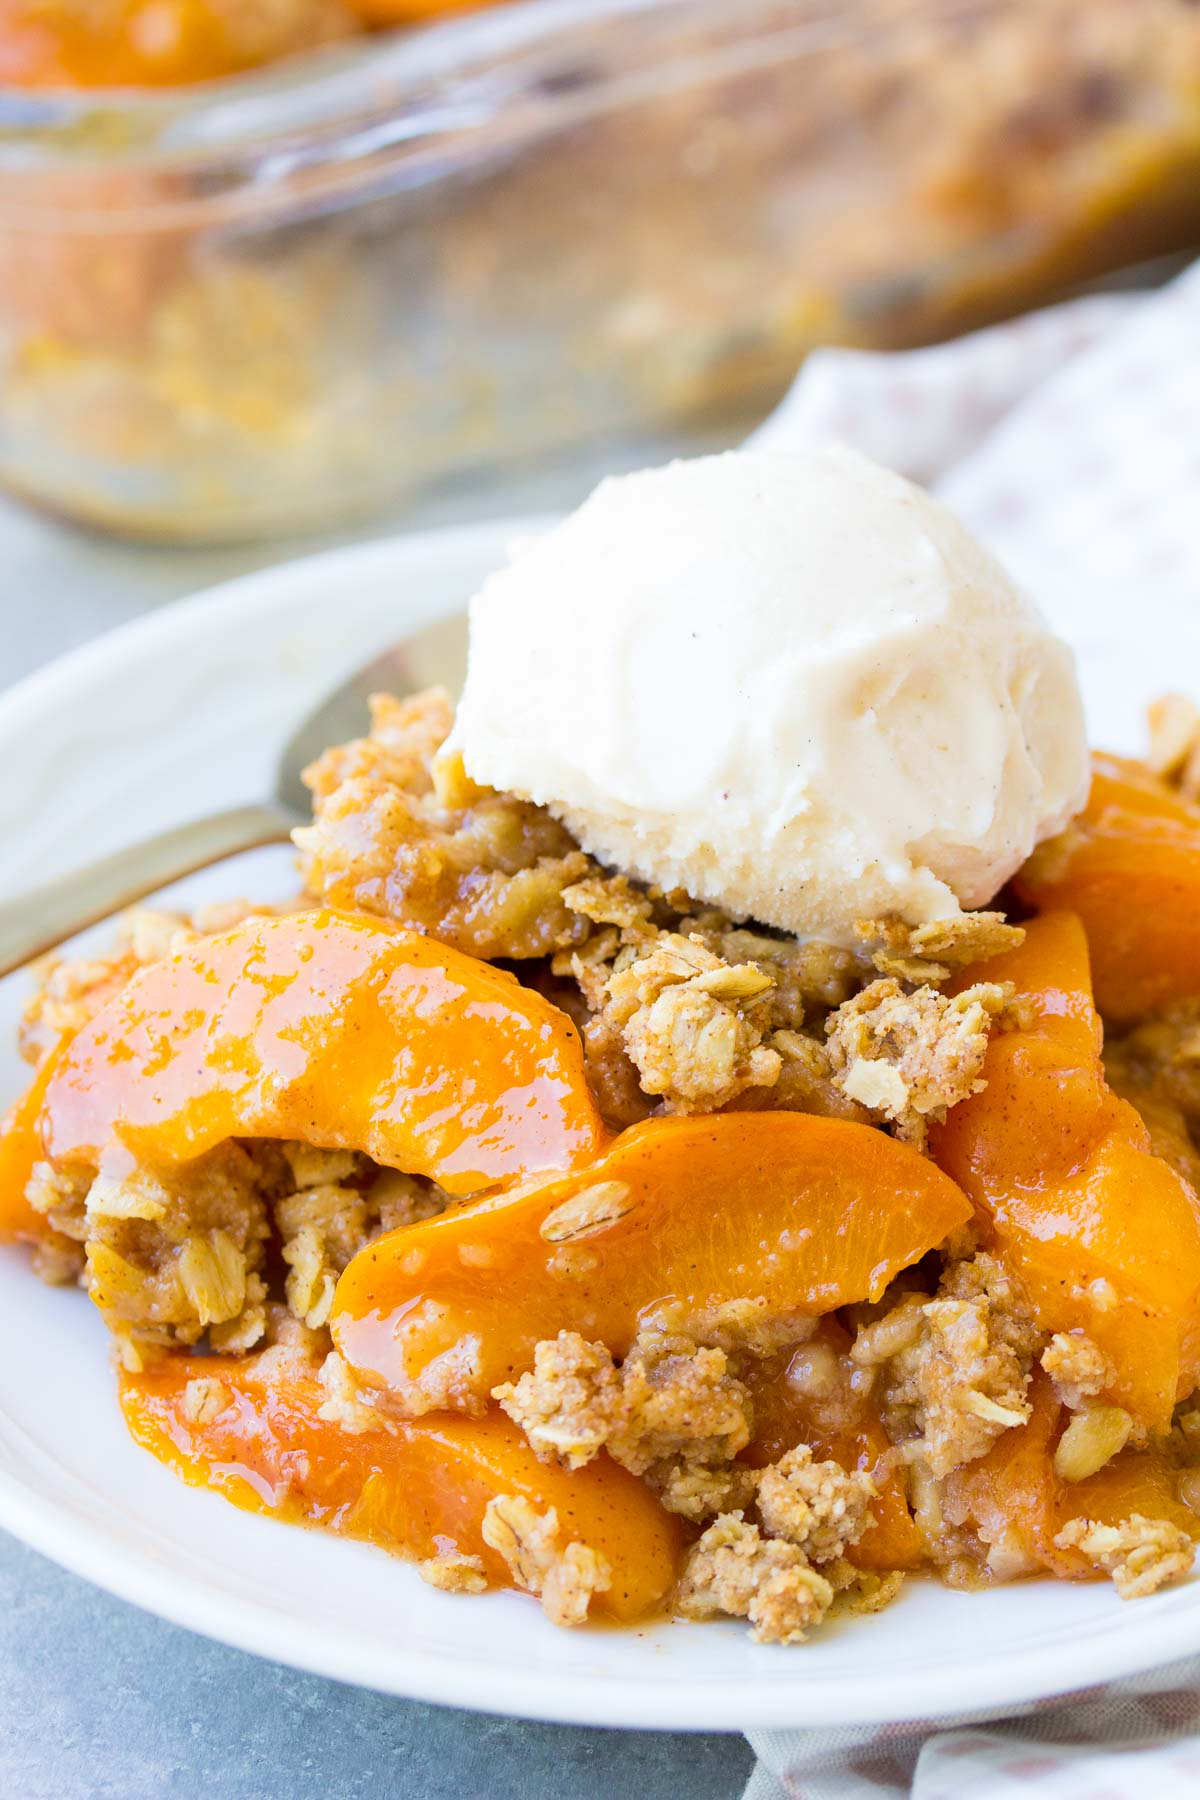 Lela Kornberg's Upside-Down Apricot Pudding Recipe - Food.com